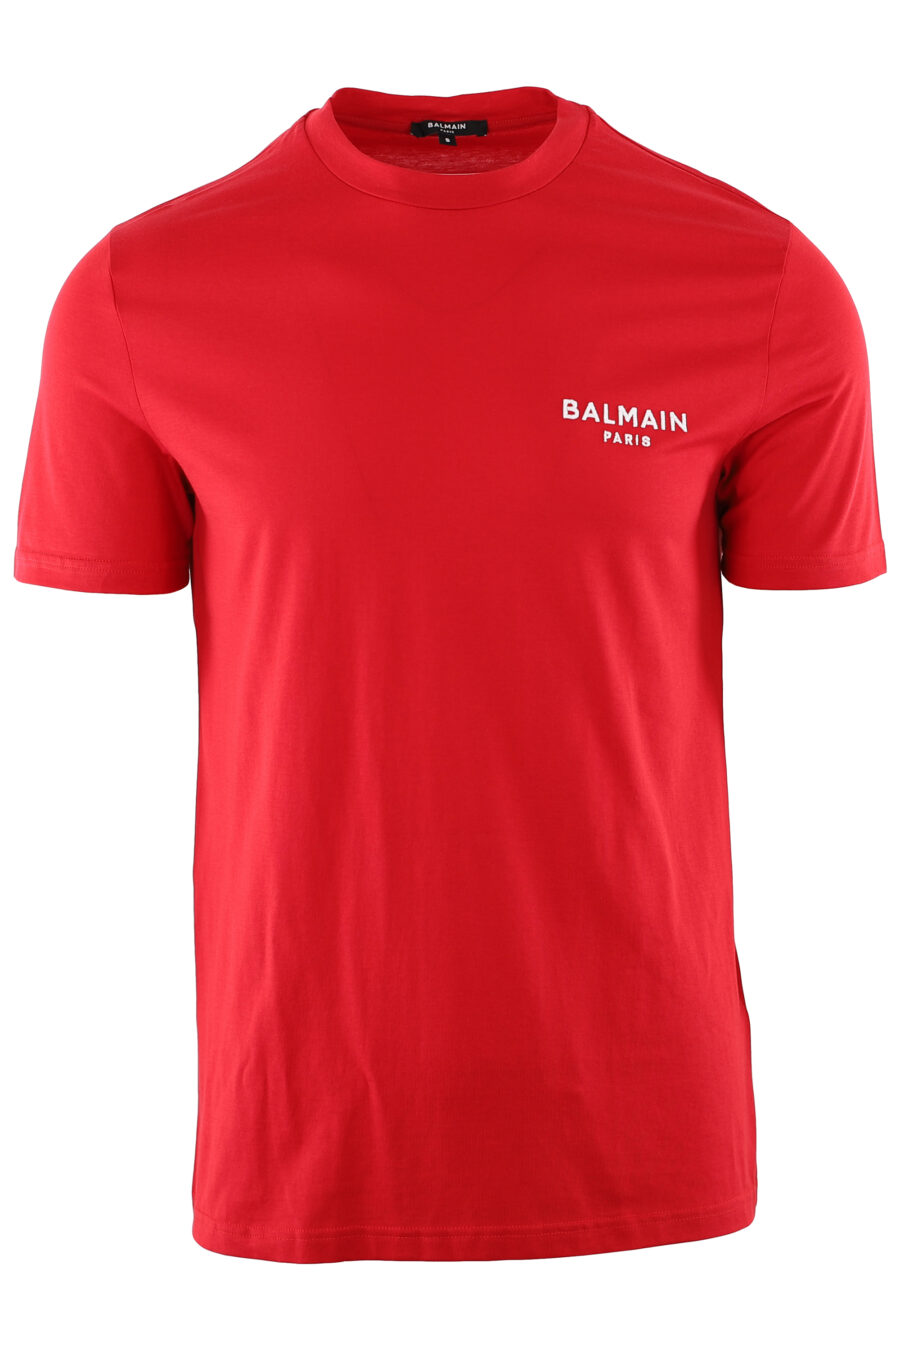 T-shirt rouge avec logo brodé blanc - IMG 7409